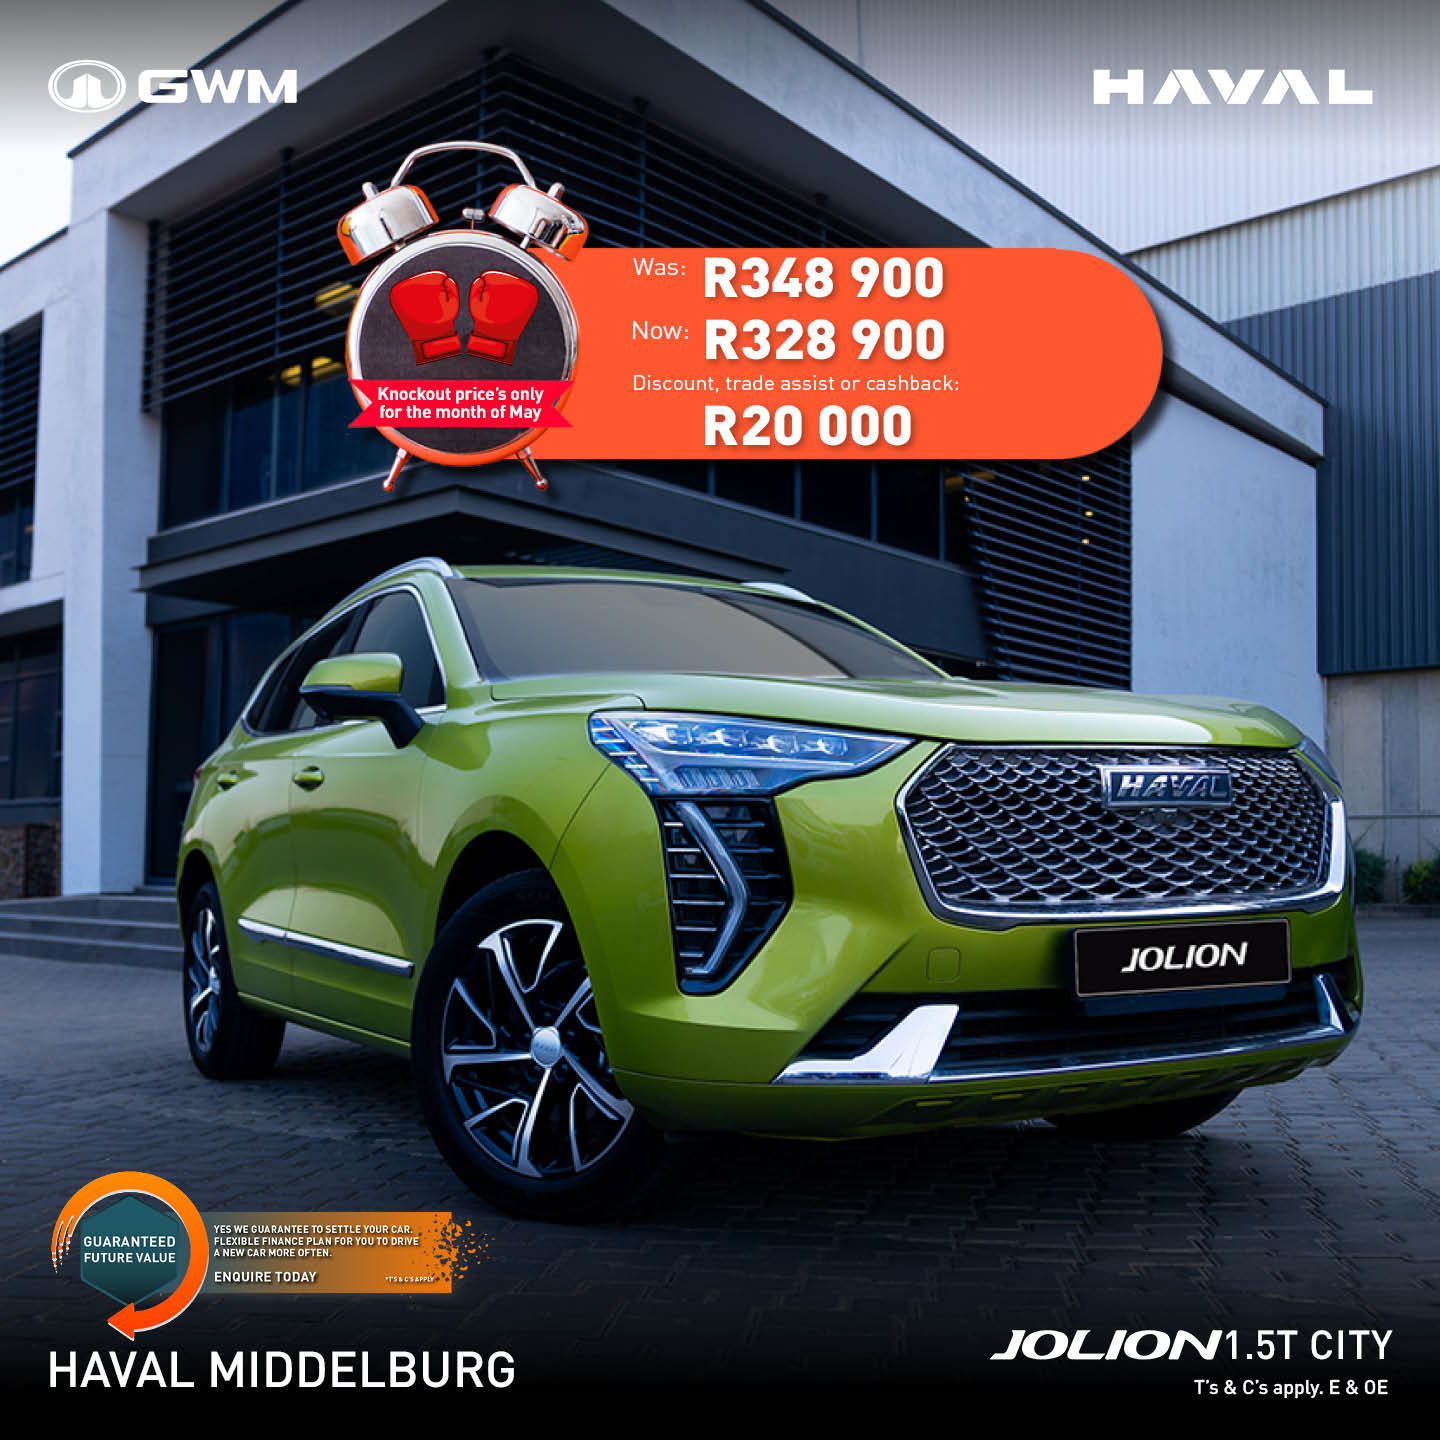 Haval Jolion 1.5T City image from Eastvaal Motors